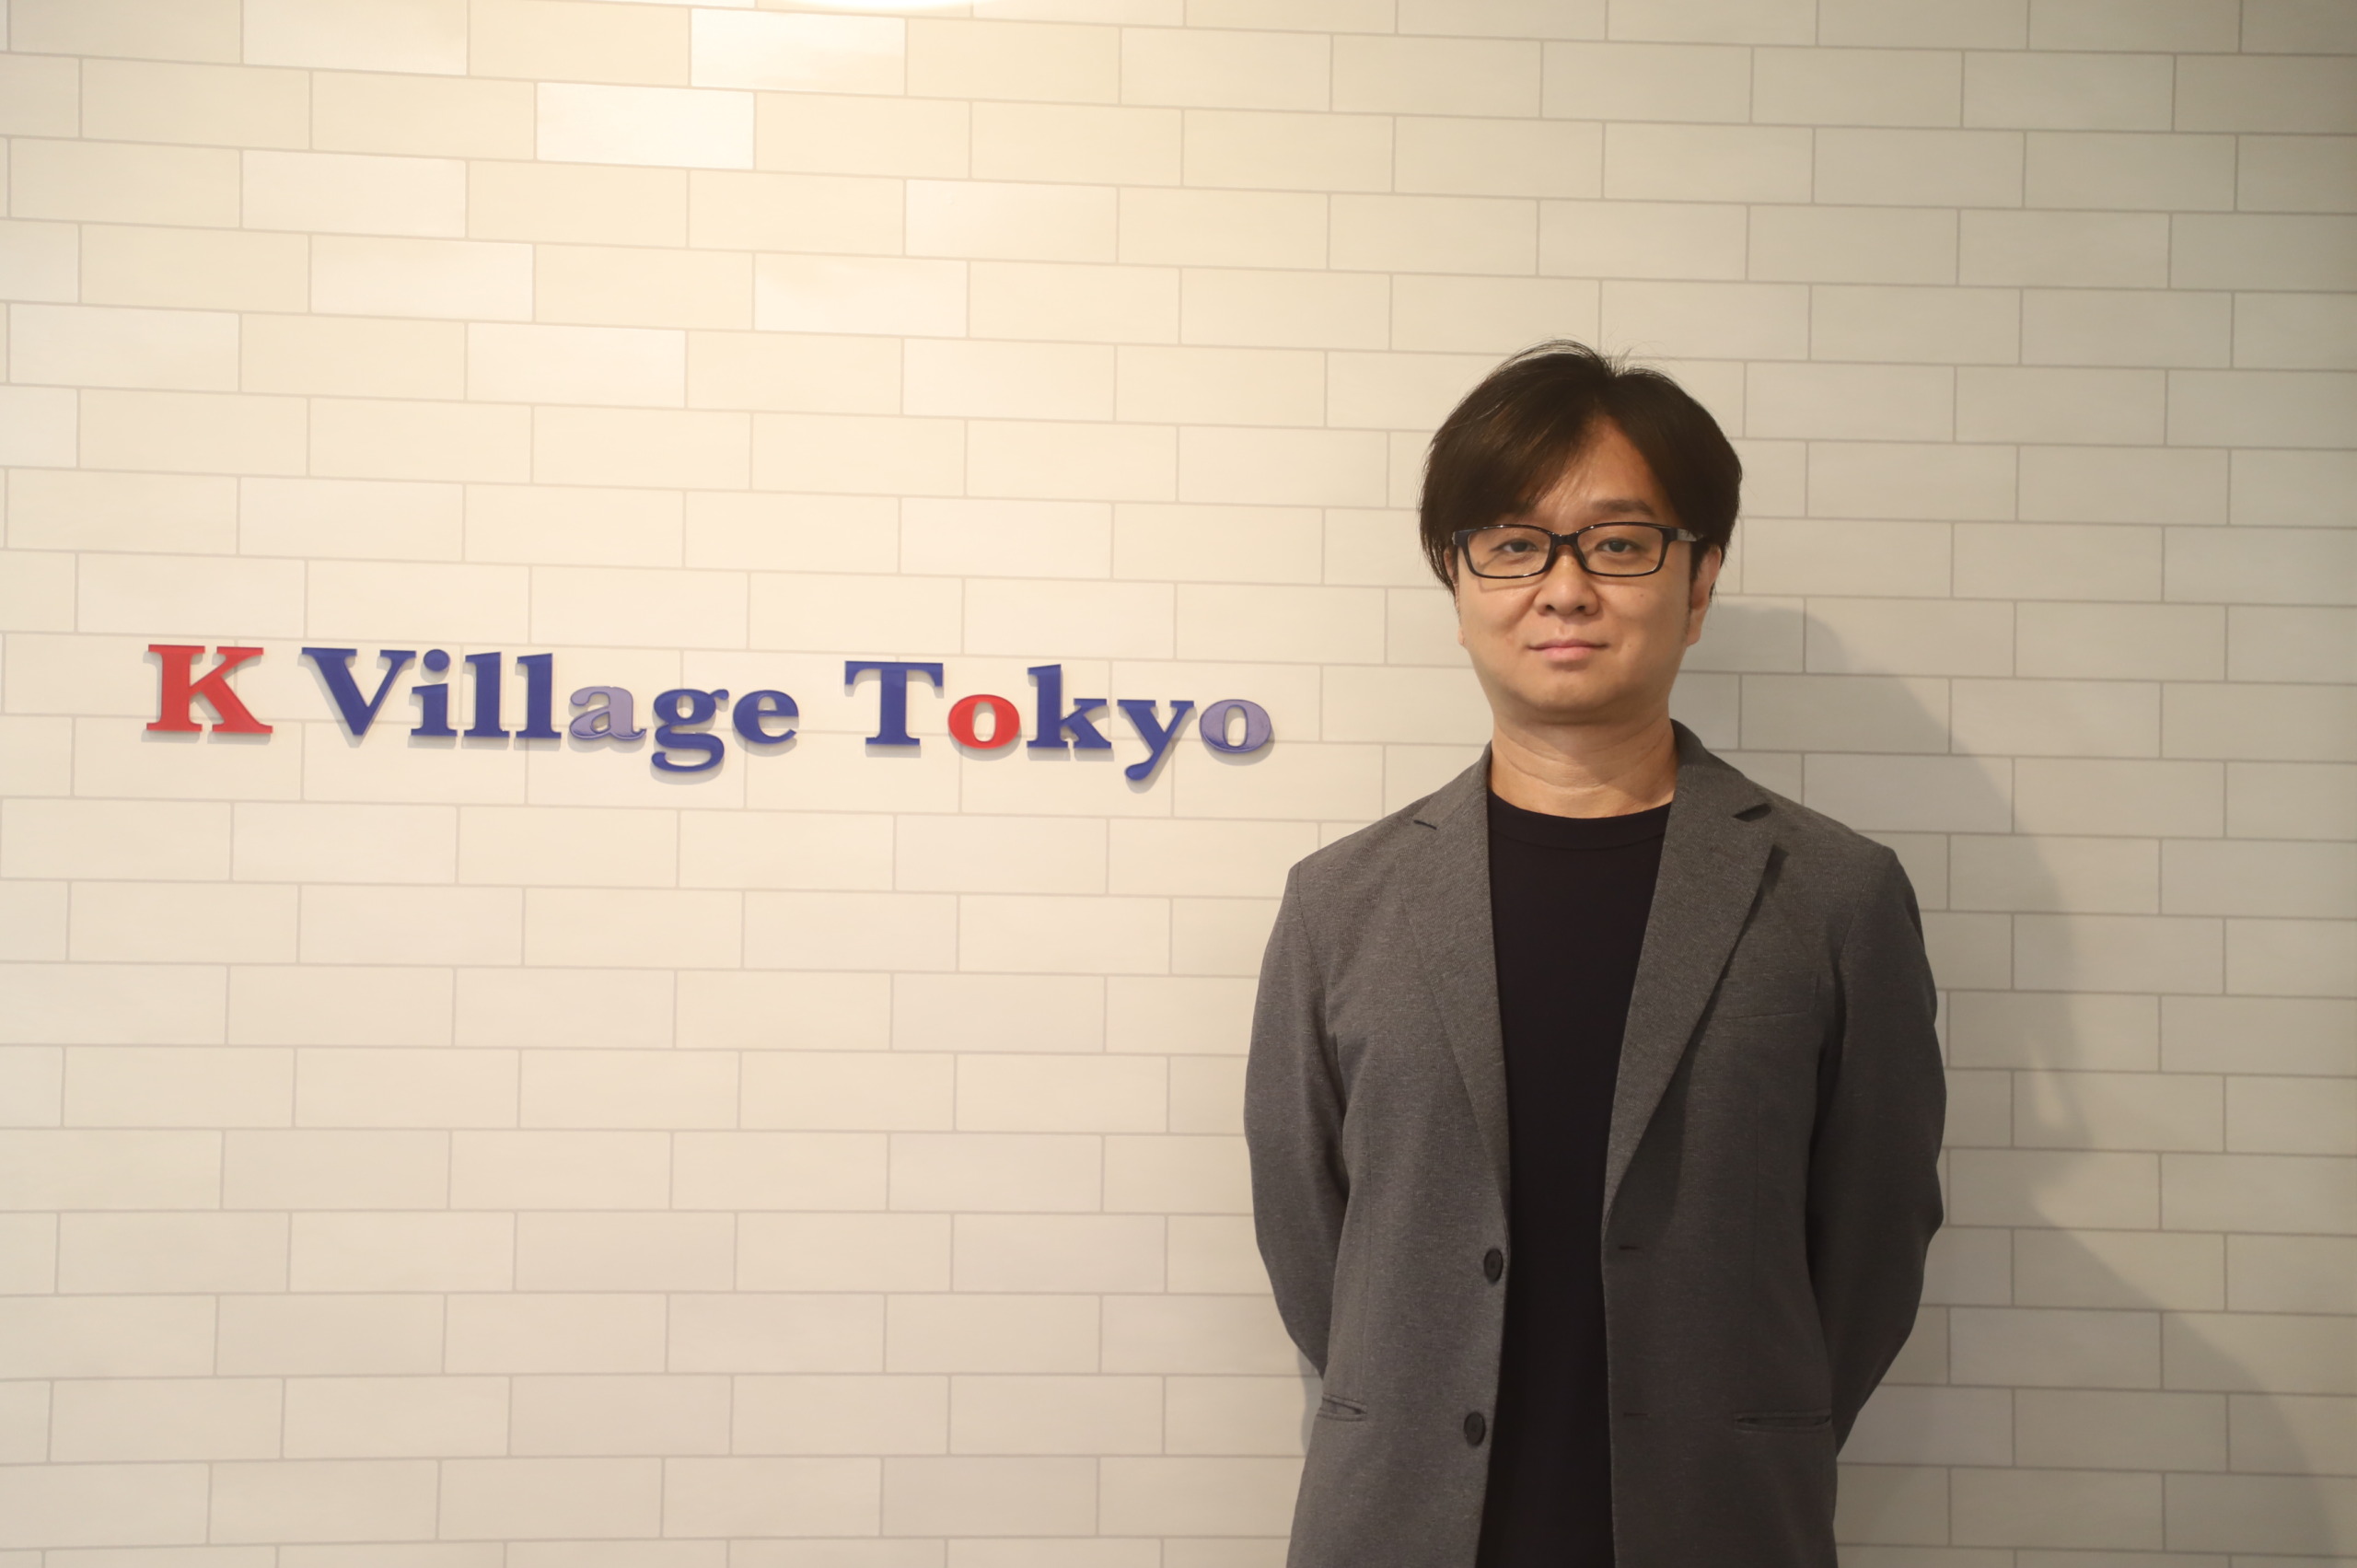 株式会社 K Village Tokyo